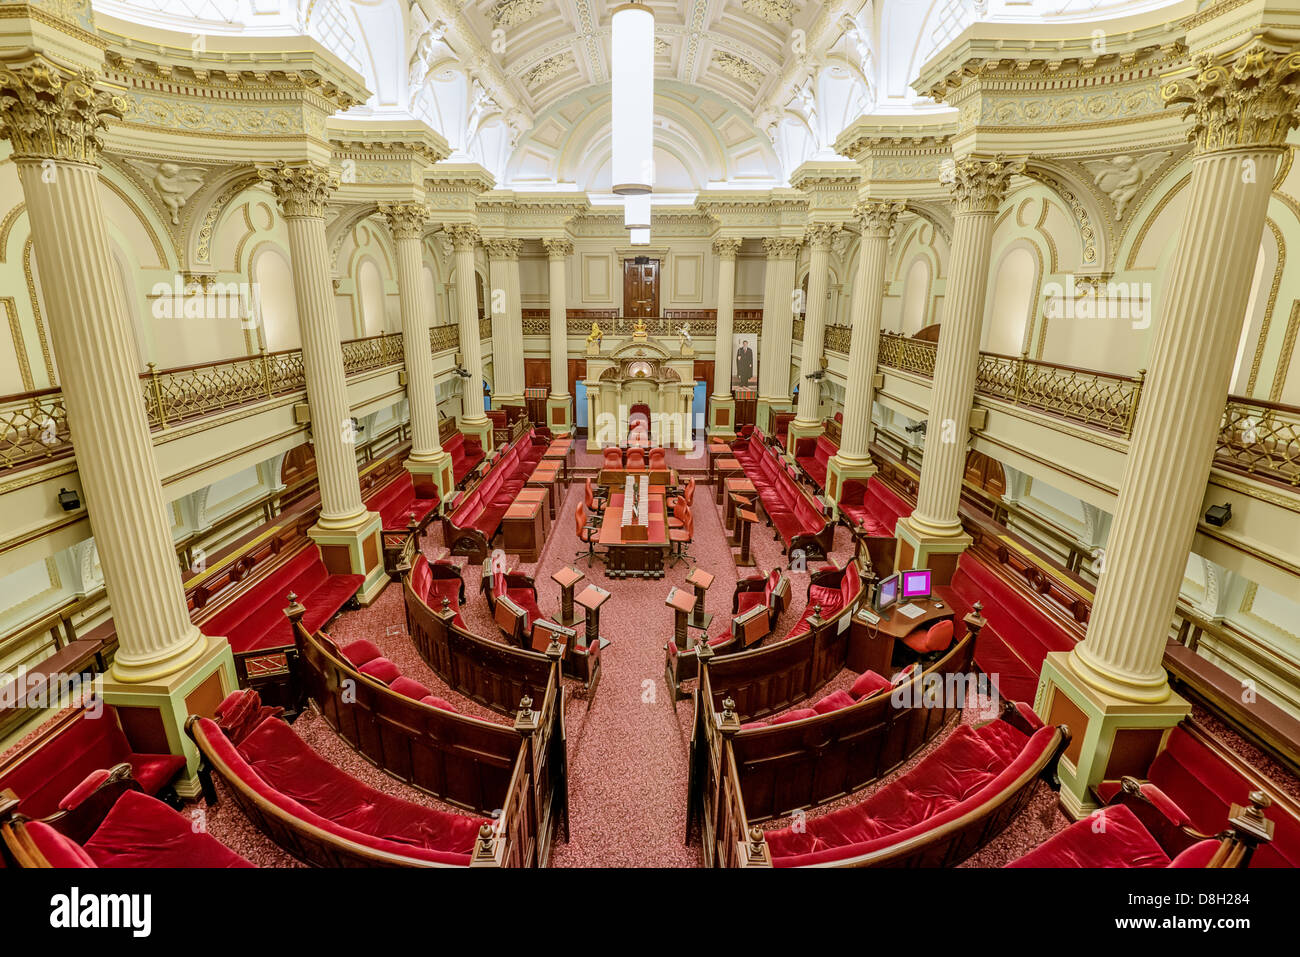 The elegant State parliament of Victoria, Australia. Stock Photo